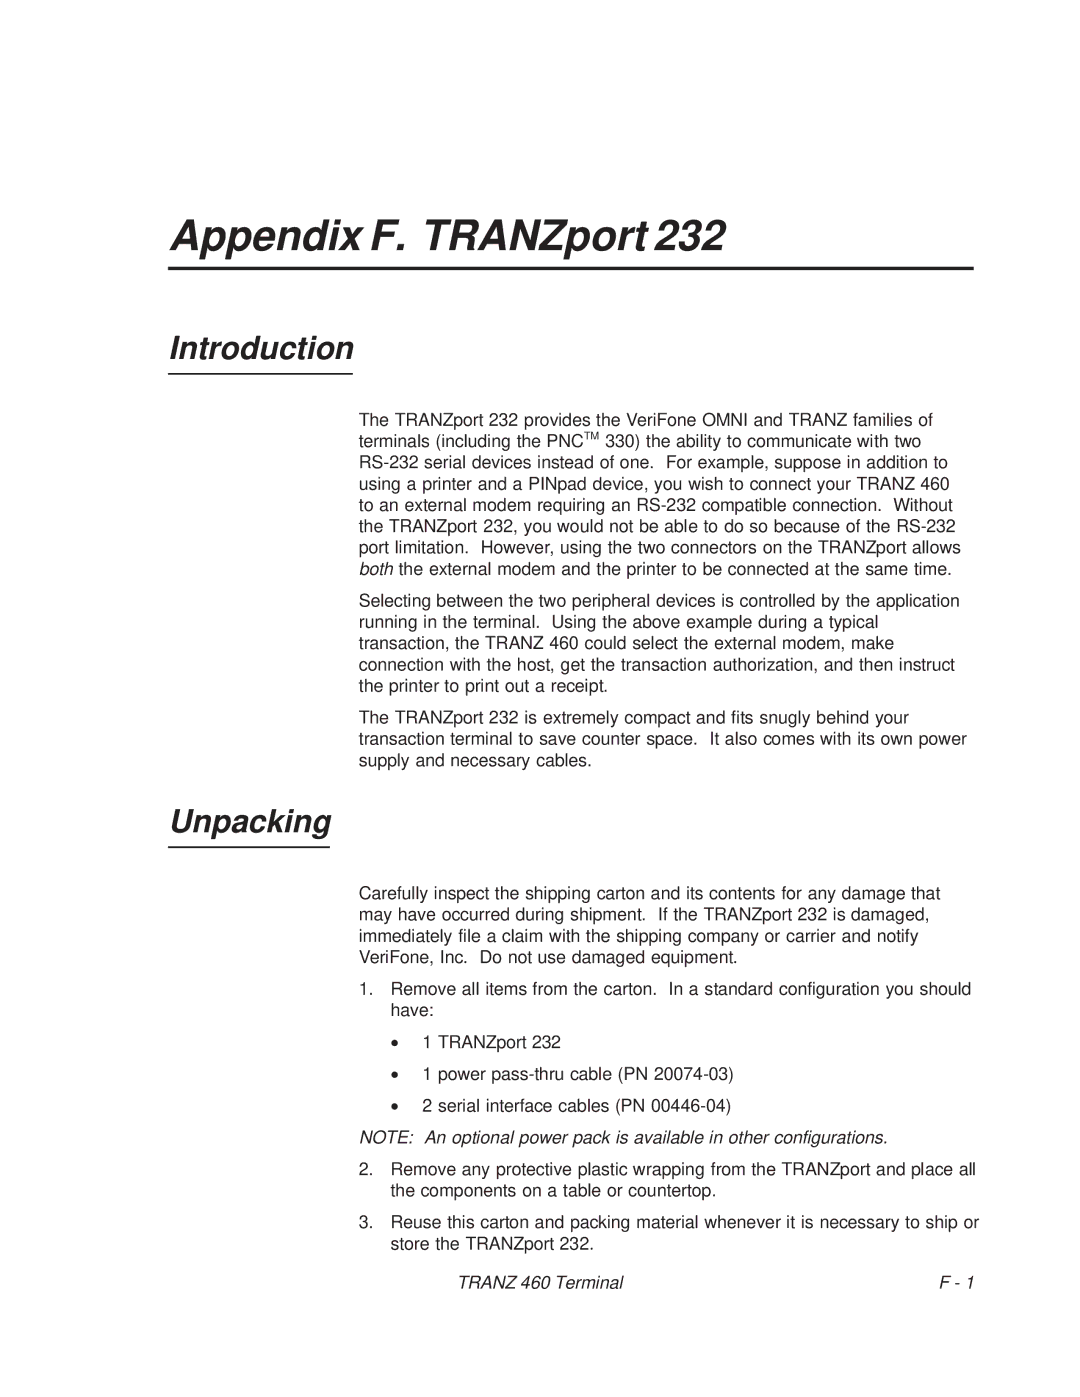 VeriFone TRANZ 460 manual Appendix F. TRANZport, Introduction 